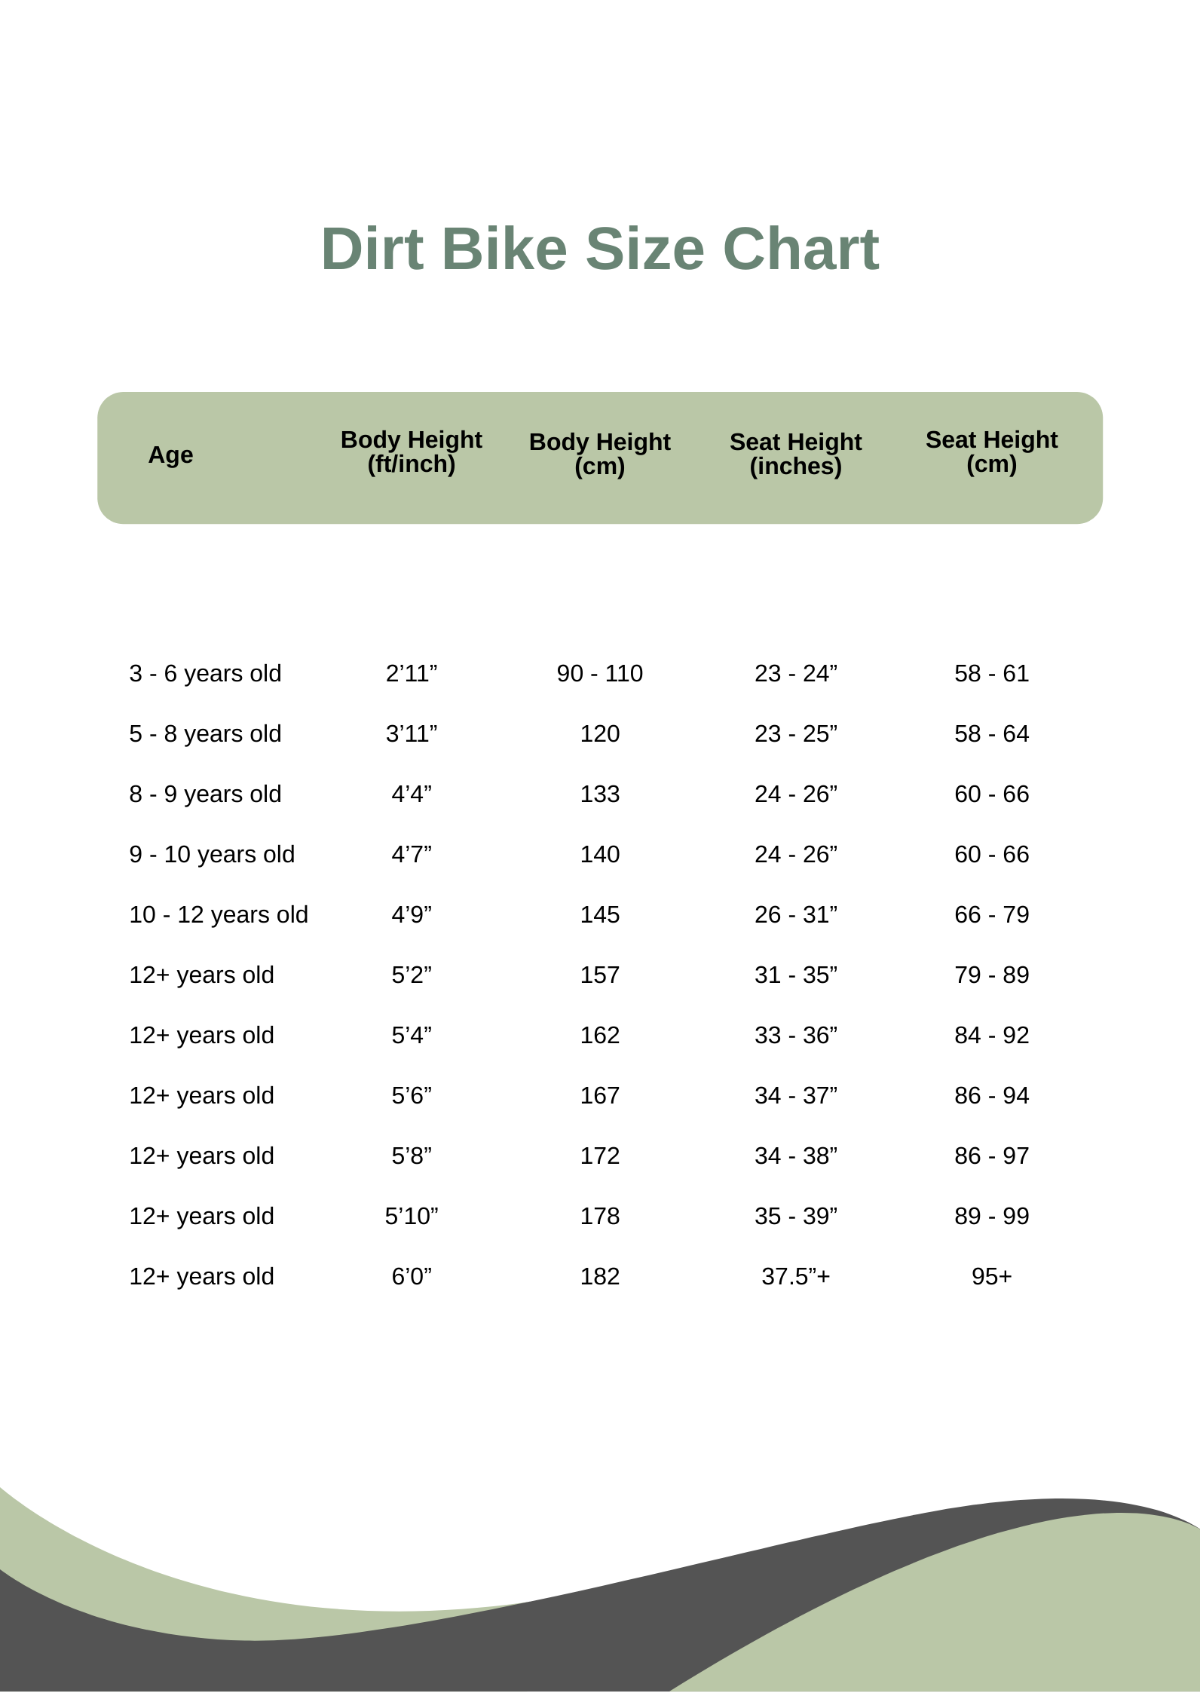 Free Dirt Bike Size Chart Template